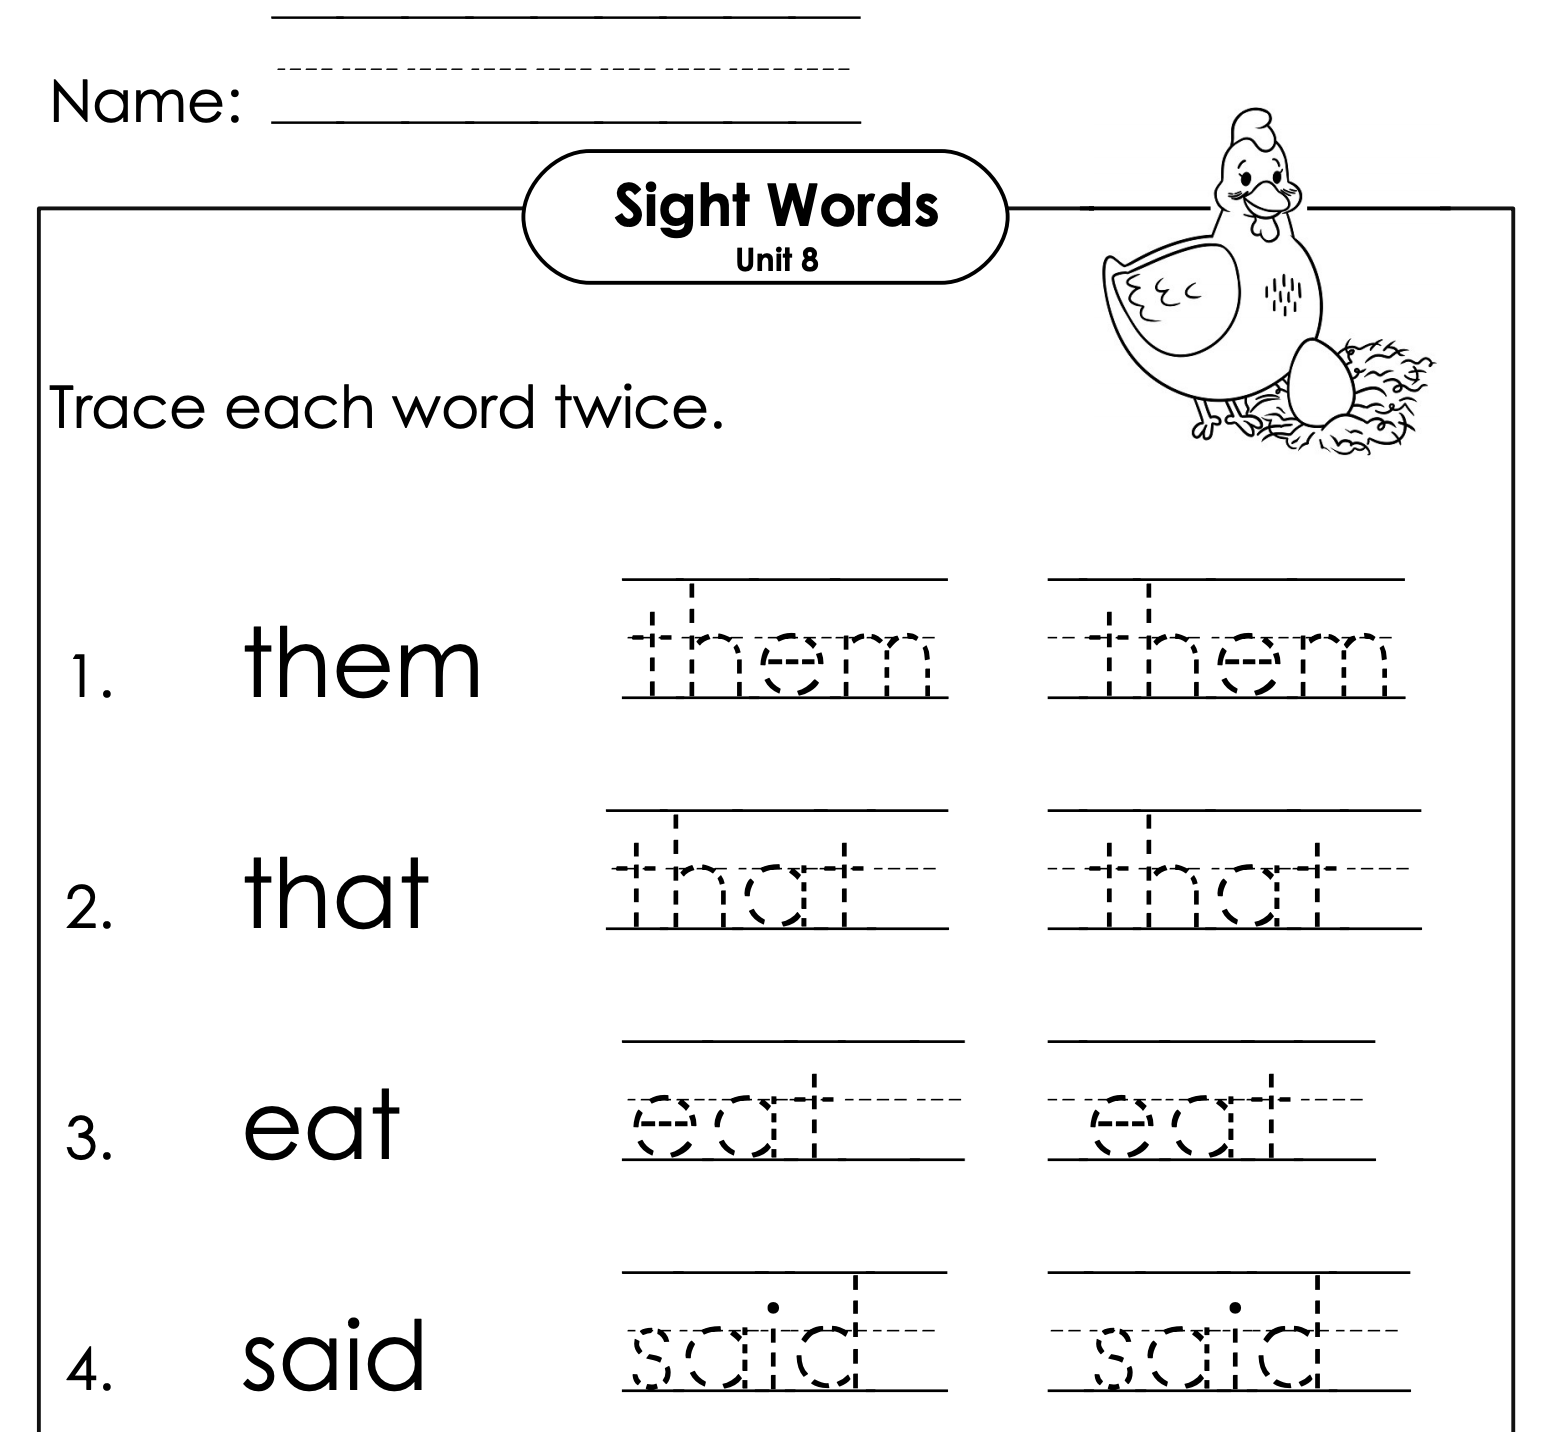 multiple-step-word-problem-worksheets-multi-step-word-problems-word-problem-worksheets-word